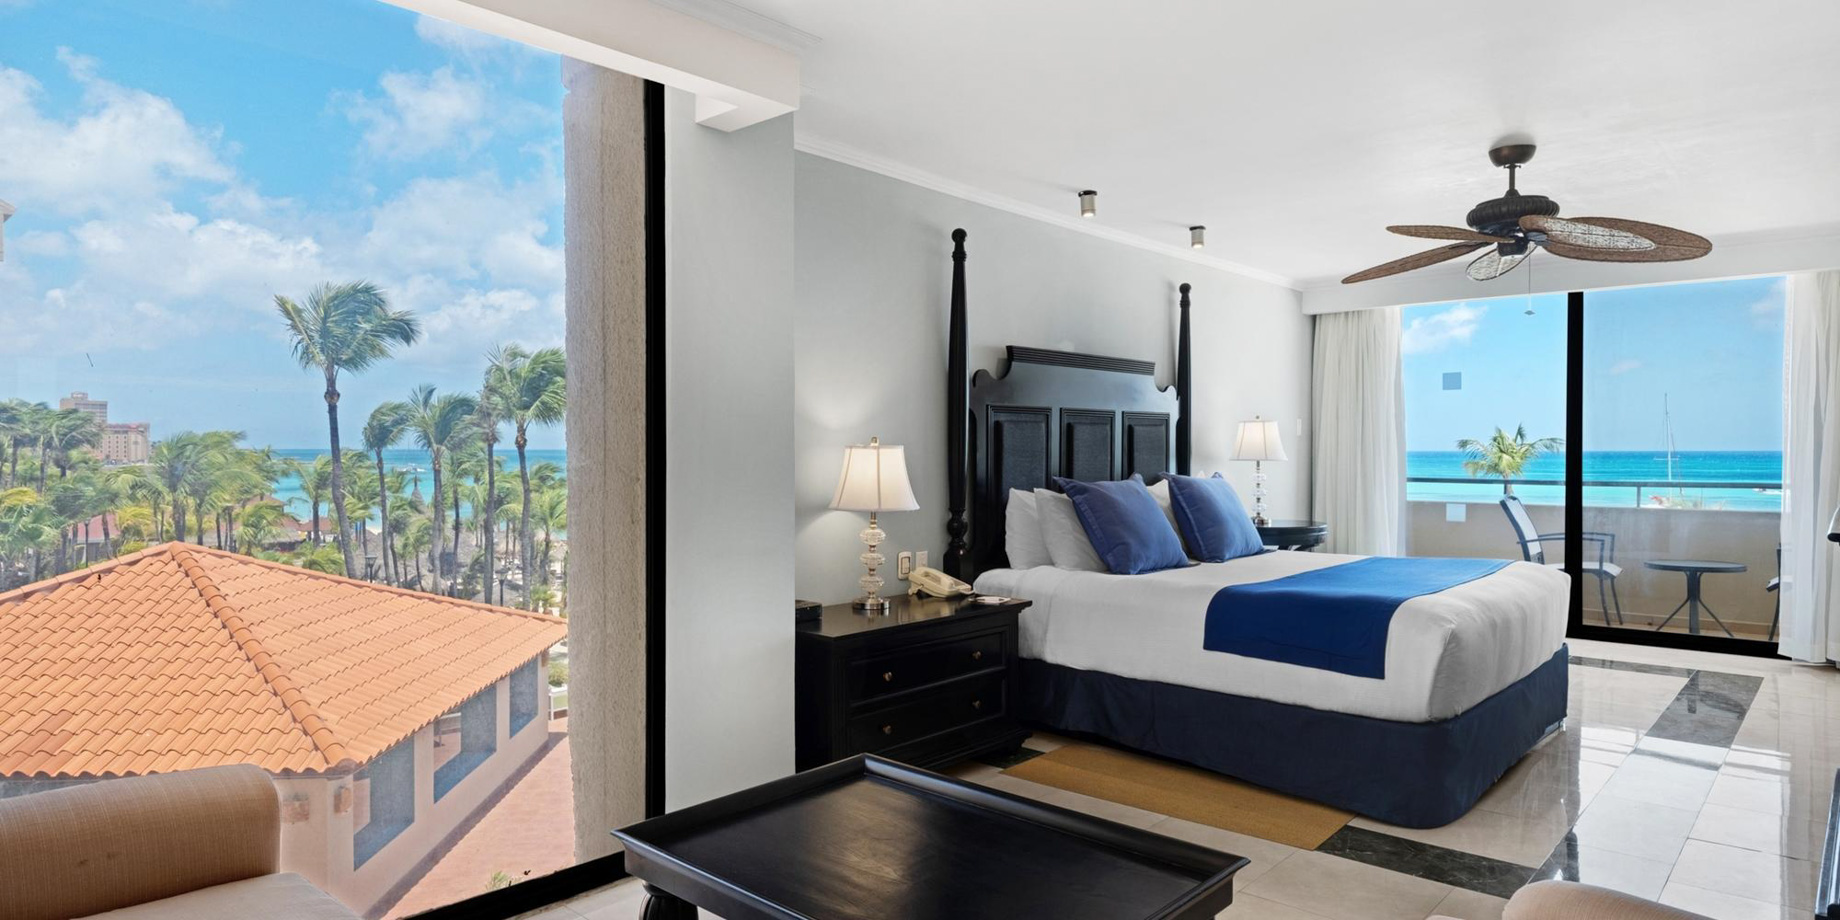 Barceló Aruba Palm Beach Resort – Noord, Aruba – Deluxe Ocean Front with Hot Tub Room